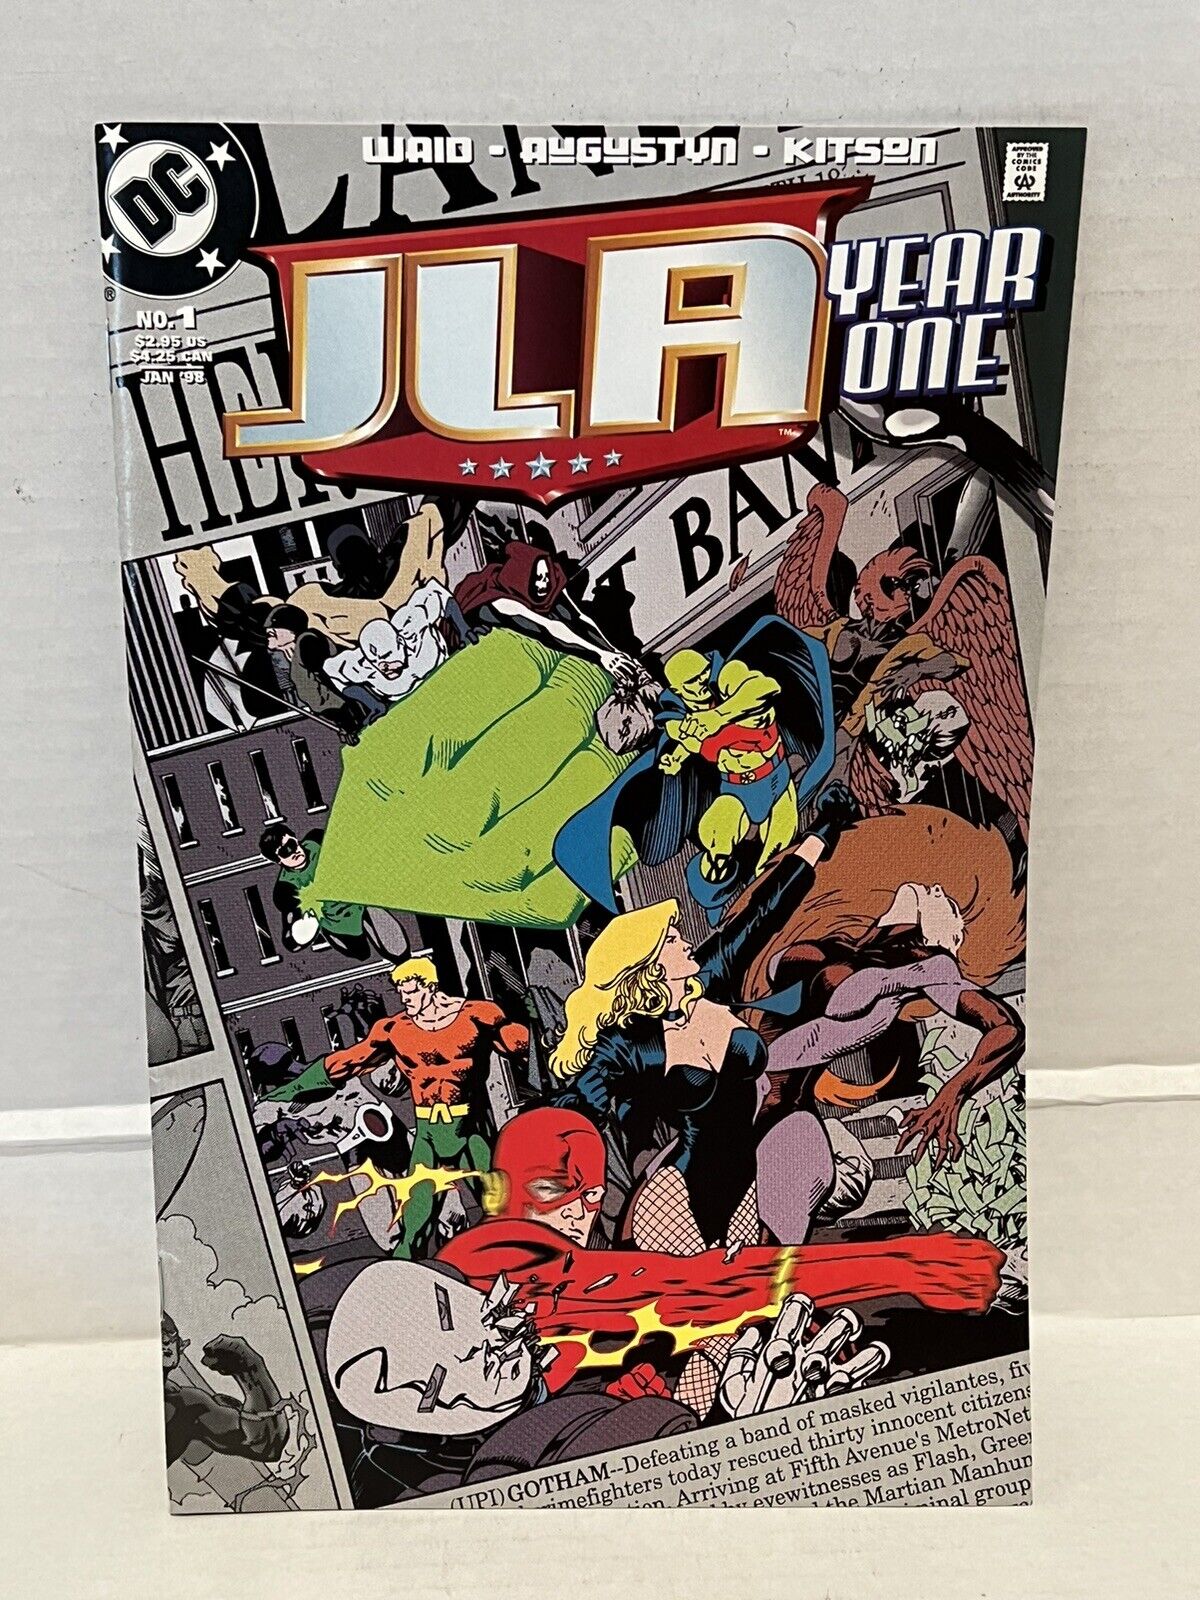 DC COMICS JLA YEAR ONE #1 JAN ‘98 By WAID, AUGUSTYN, KITSON